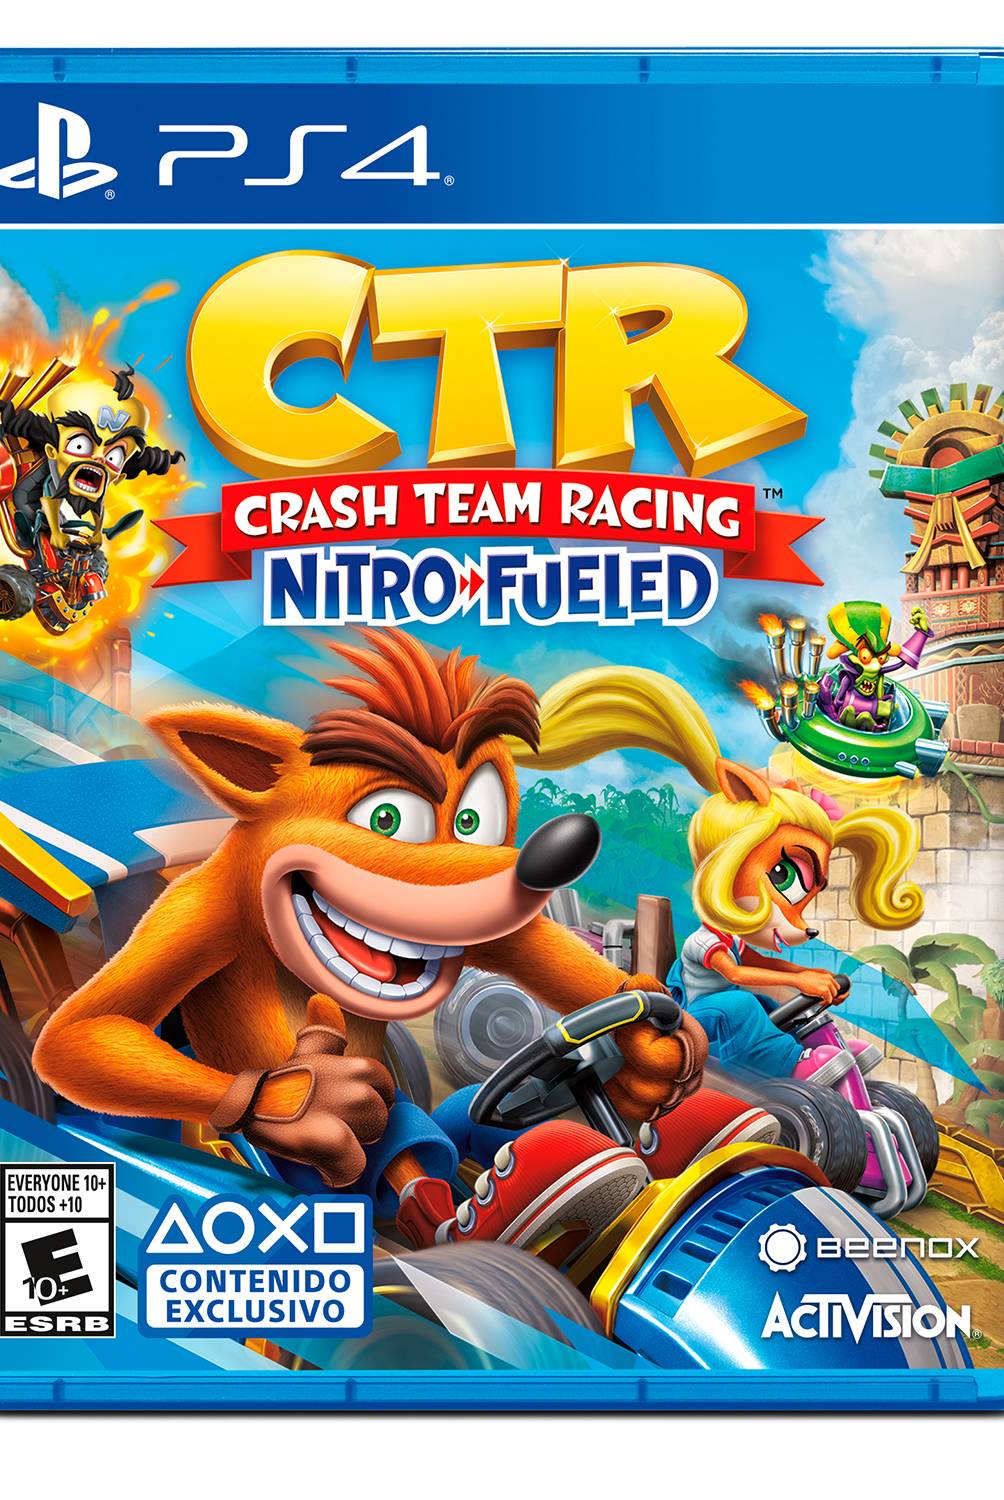 ACTIVISION - Crash Team Racing Ps4 Activision